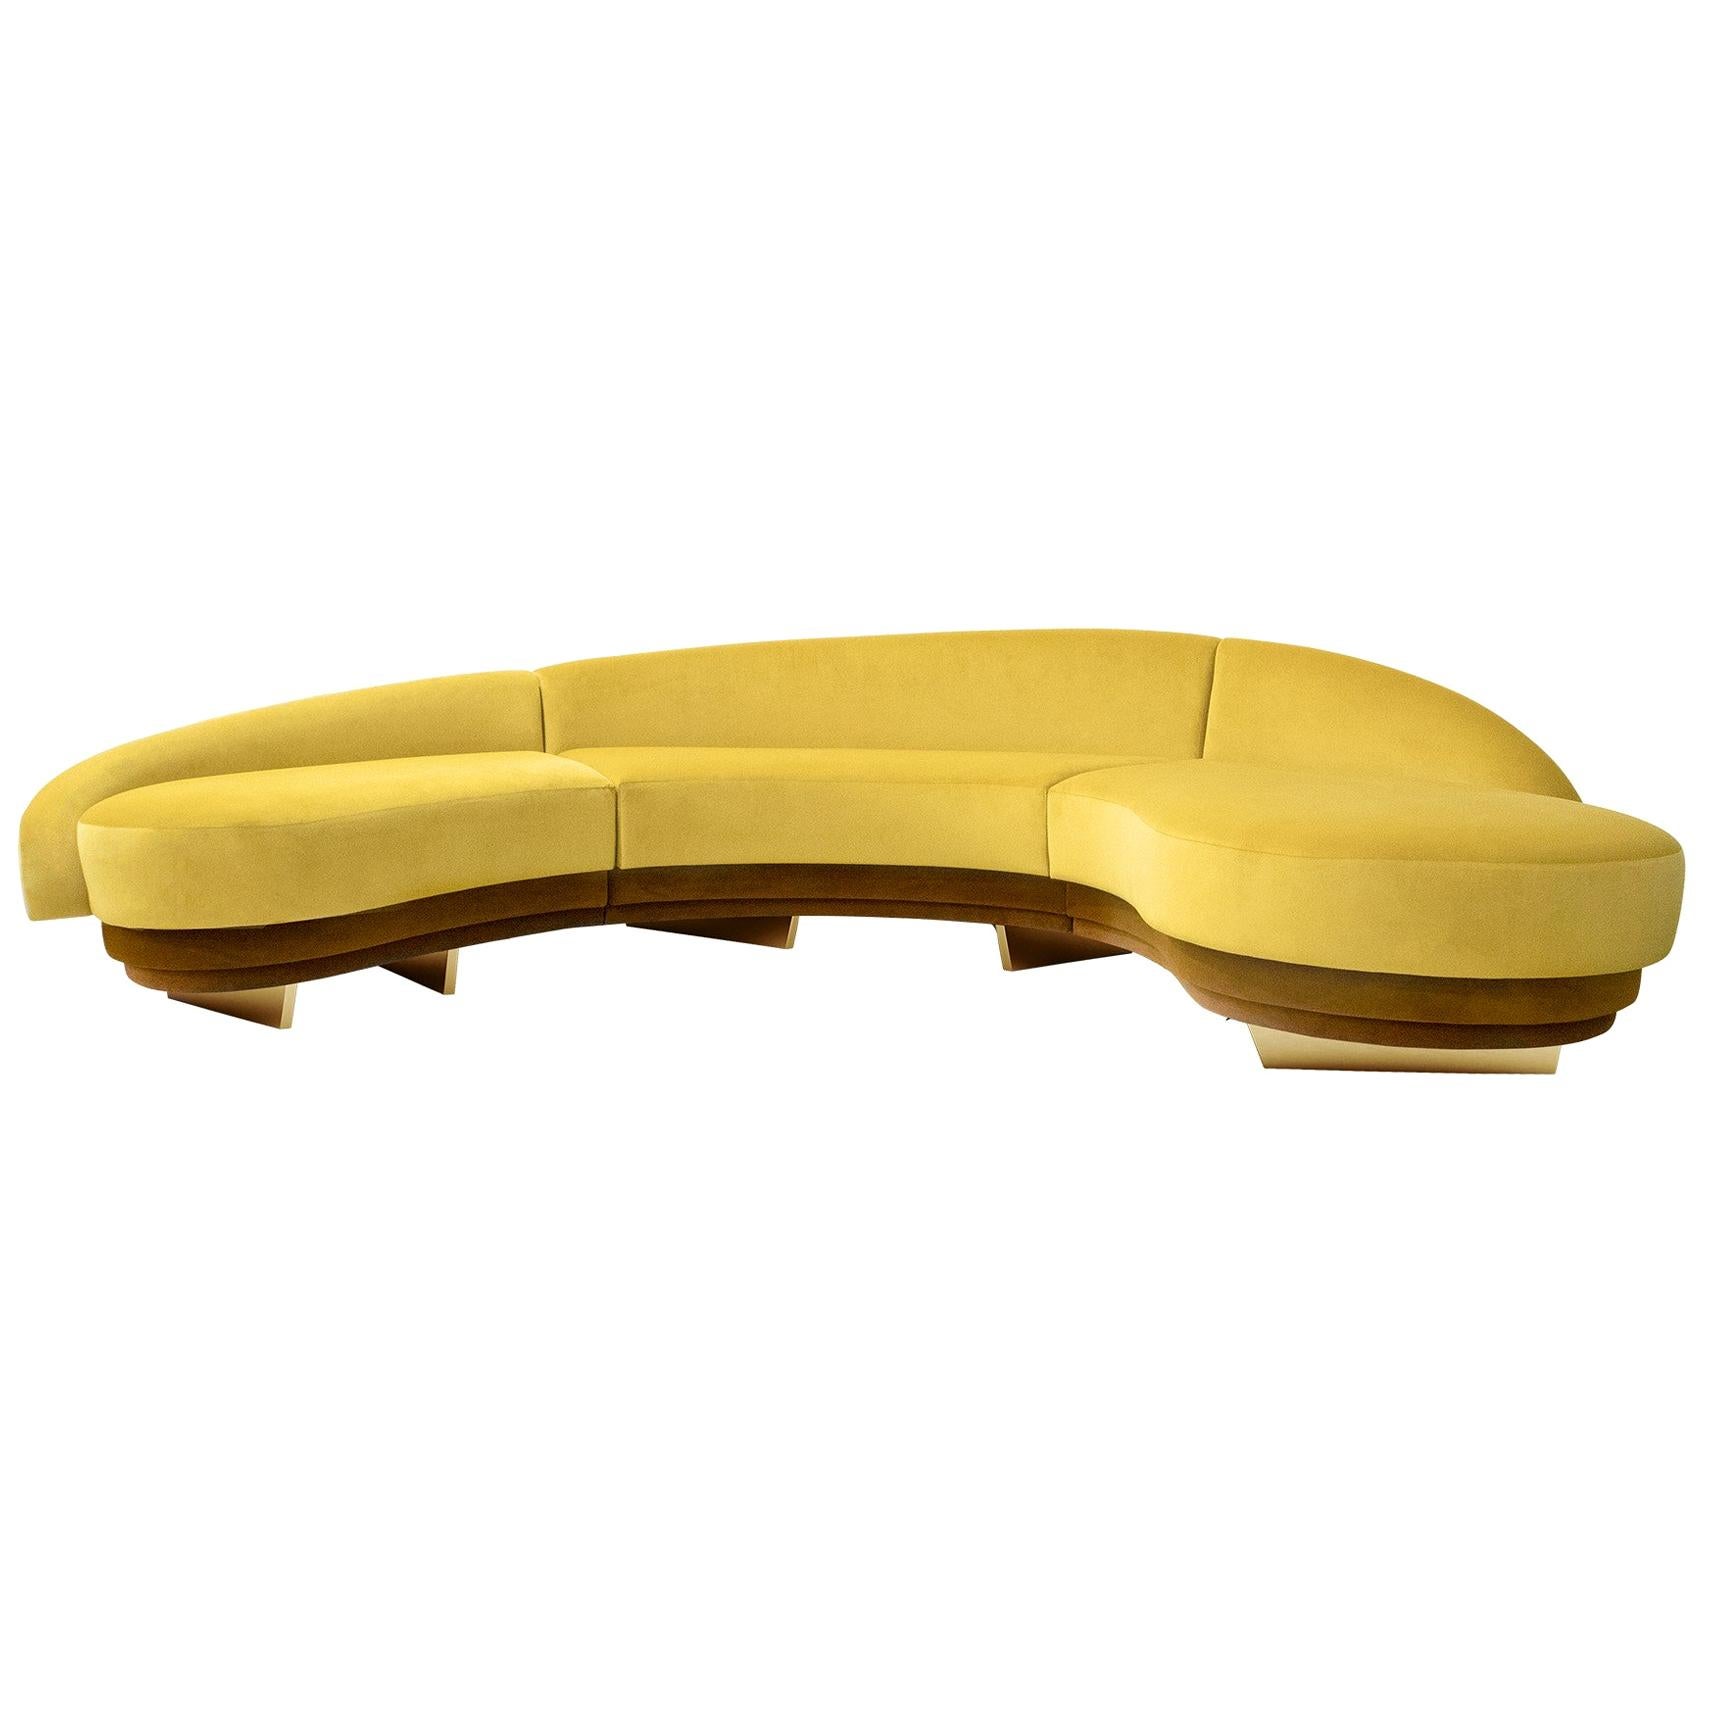 Mid-Century Modern Curved Serpentine Sofa in Yellow Velvet Gold & Wood Details